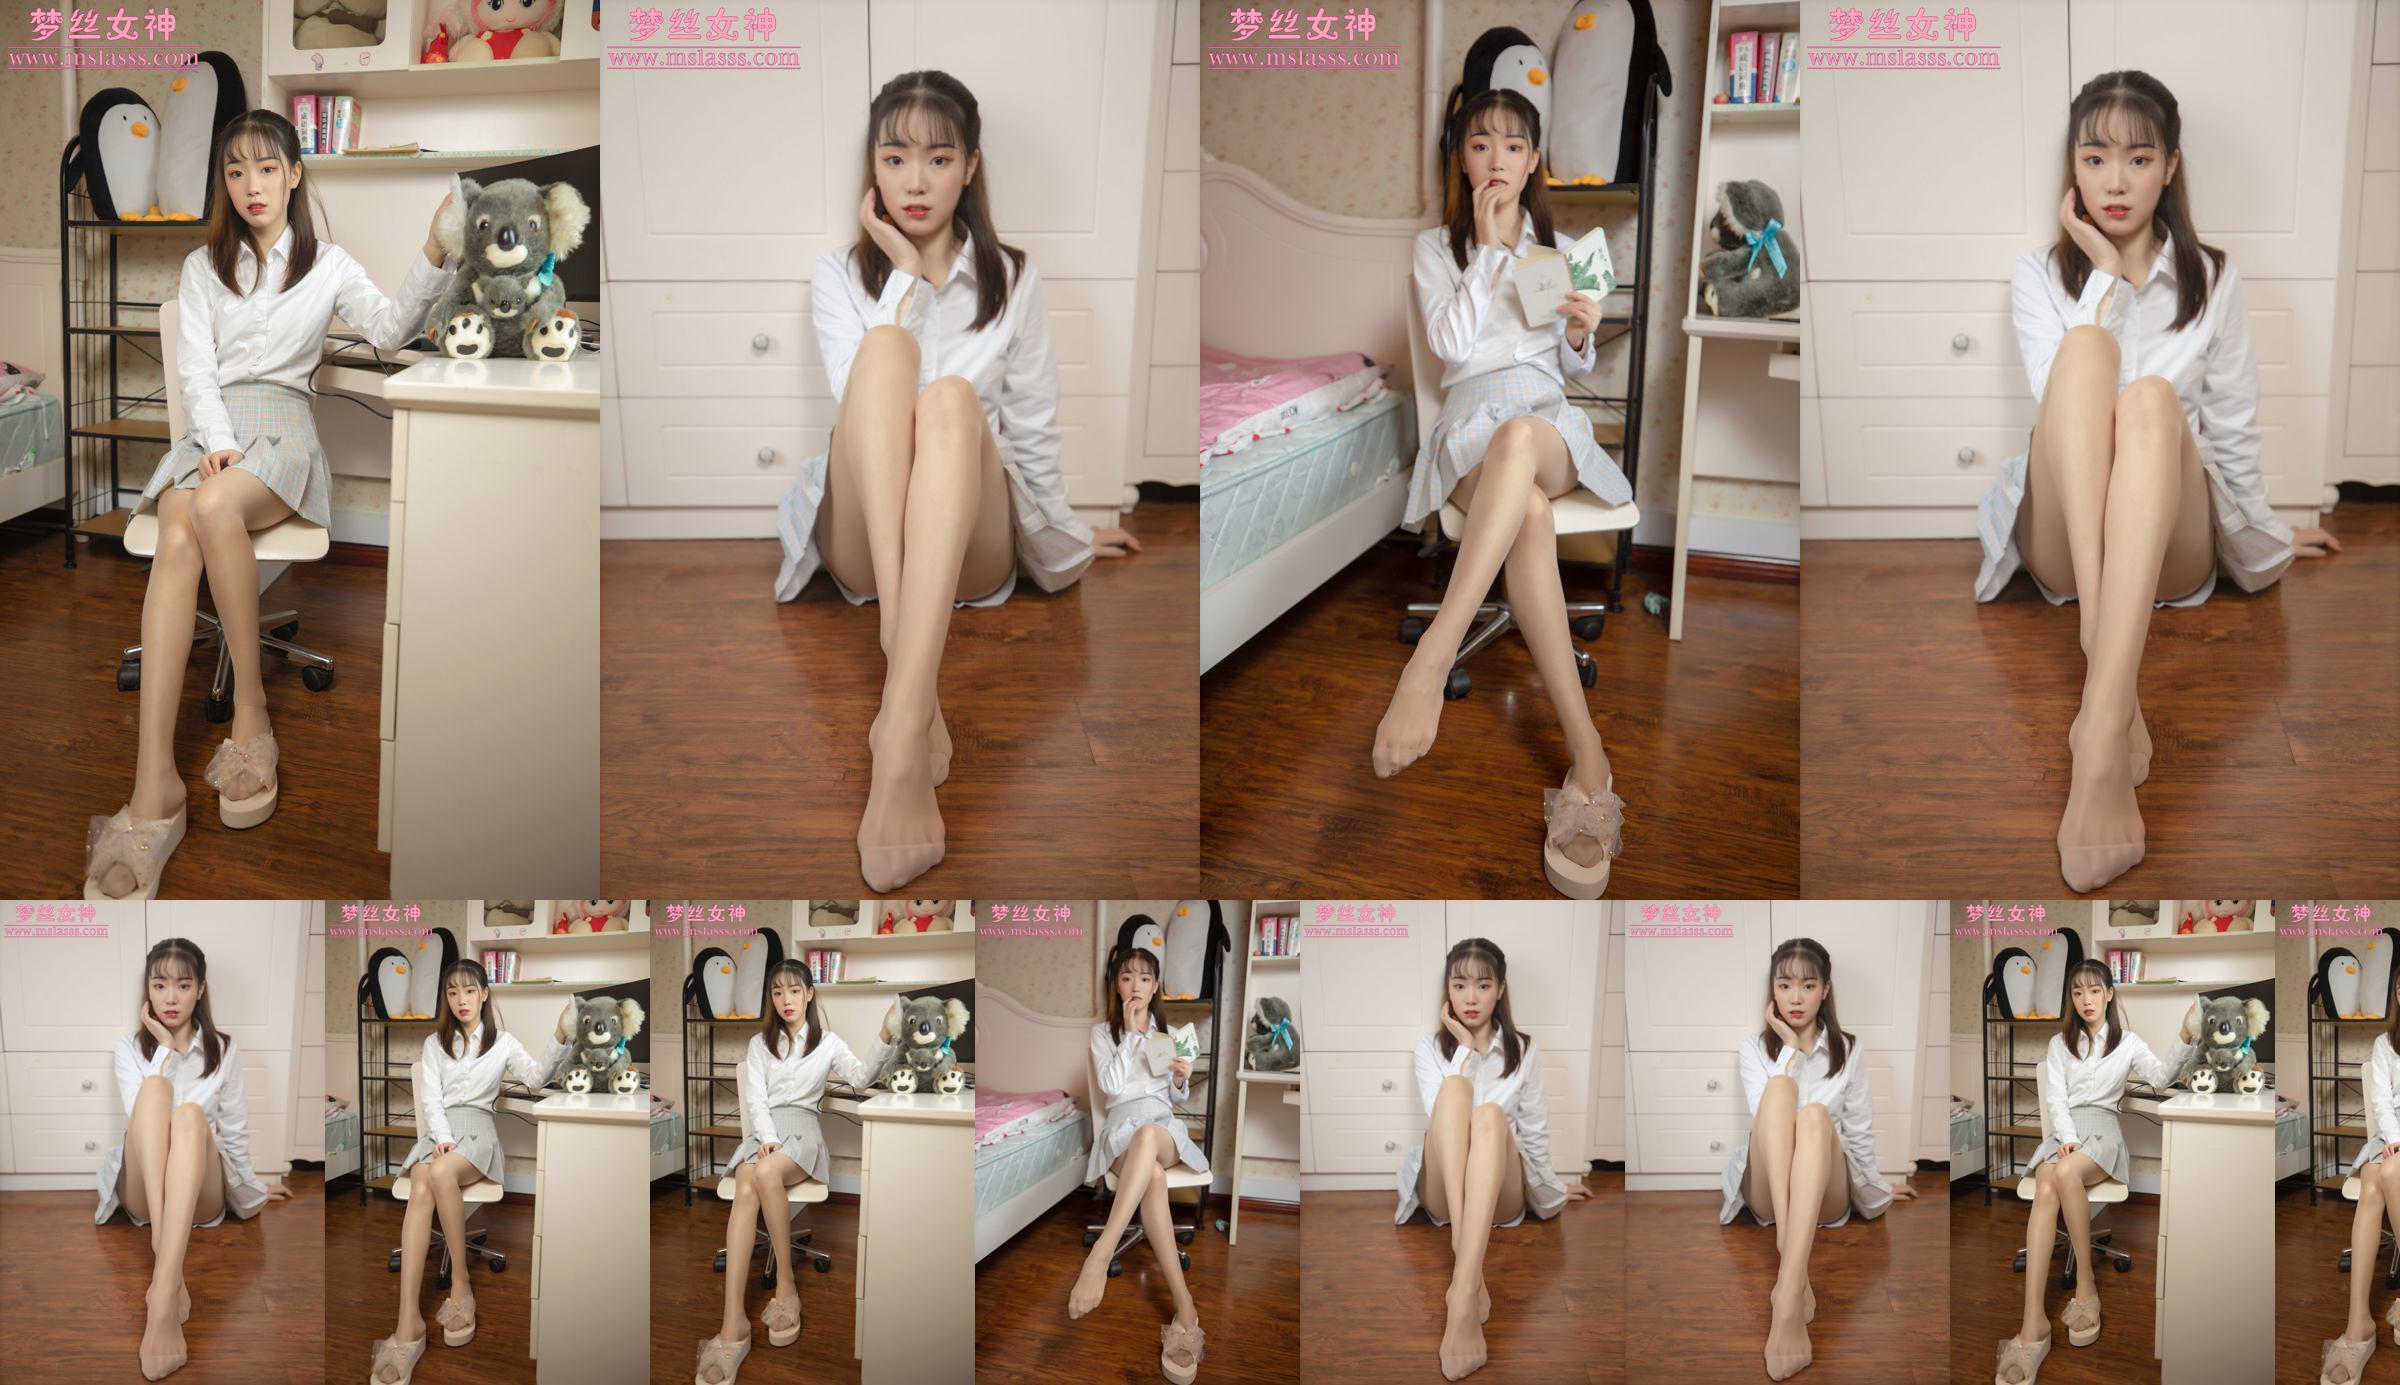 [MSLASS] Zhang Qiying new model goddess No.20eb7d Page 1